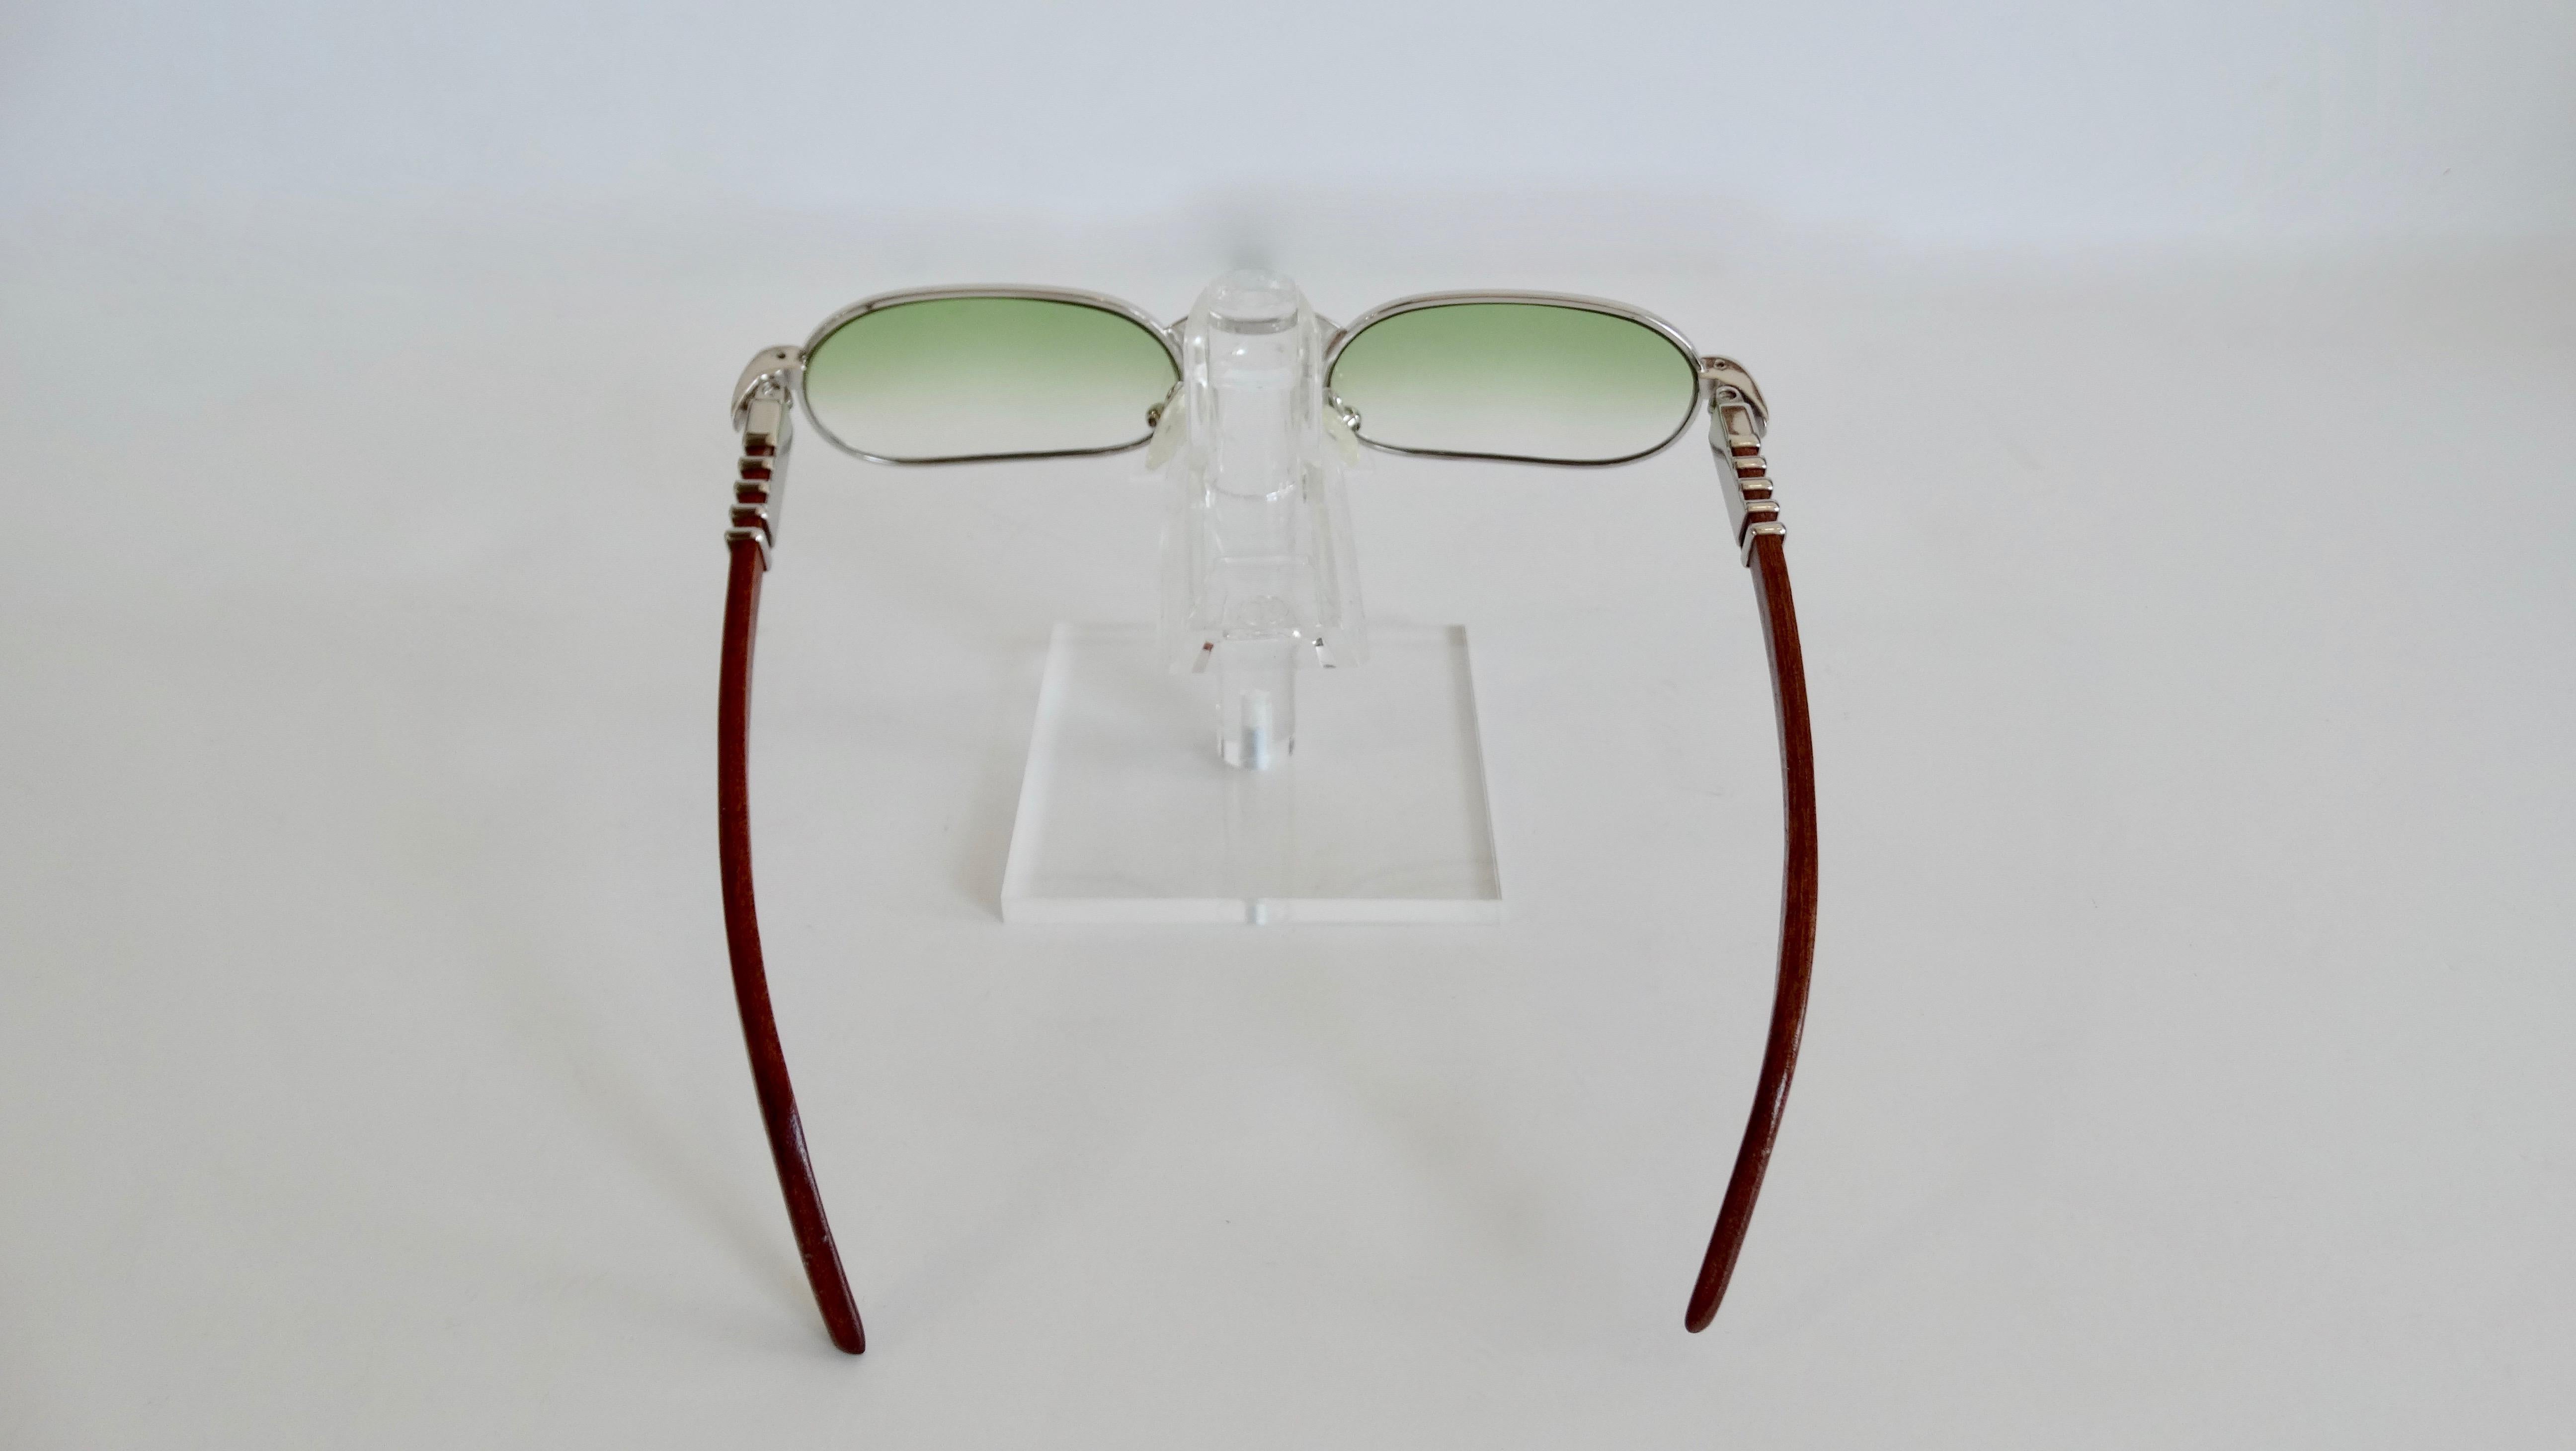 Porta Romana 1990s Green Ombre Lens Sunglasses  In Good Condition For Sale In Scottsdale, AZ